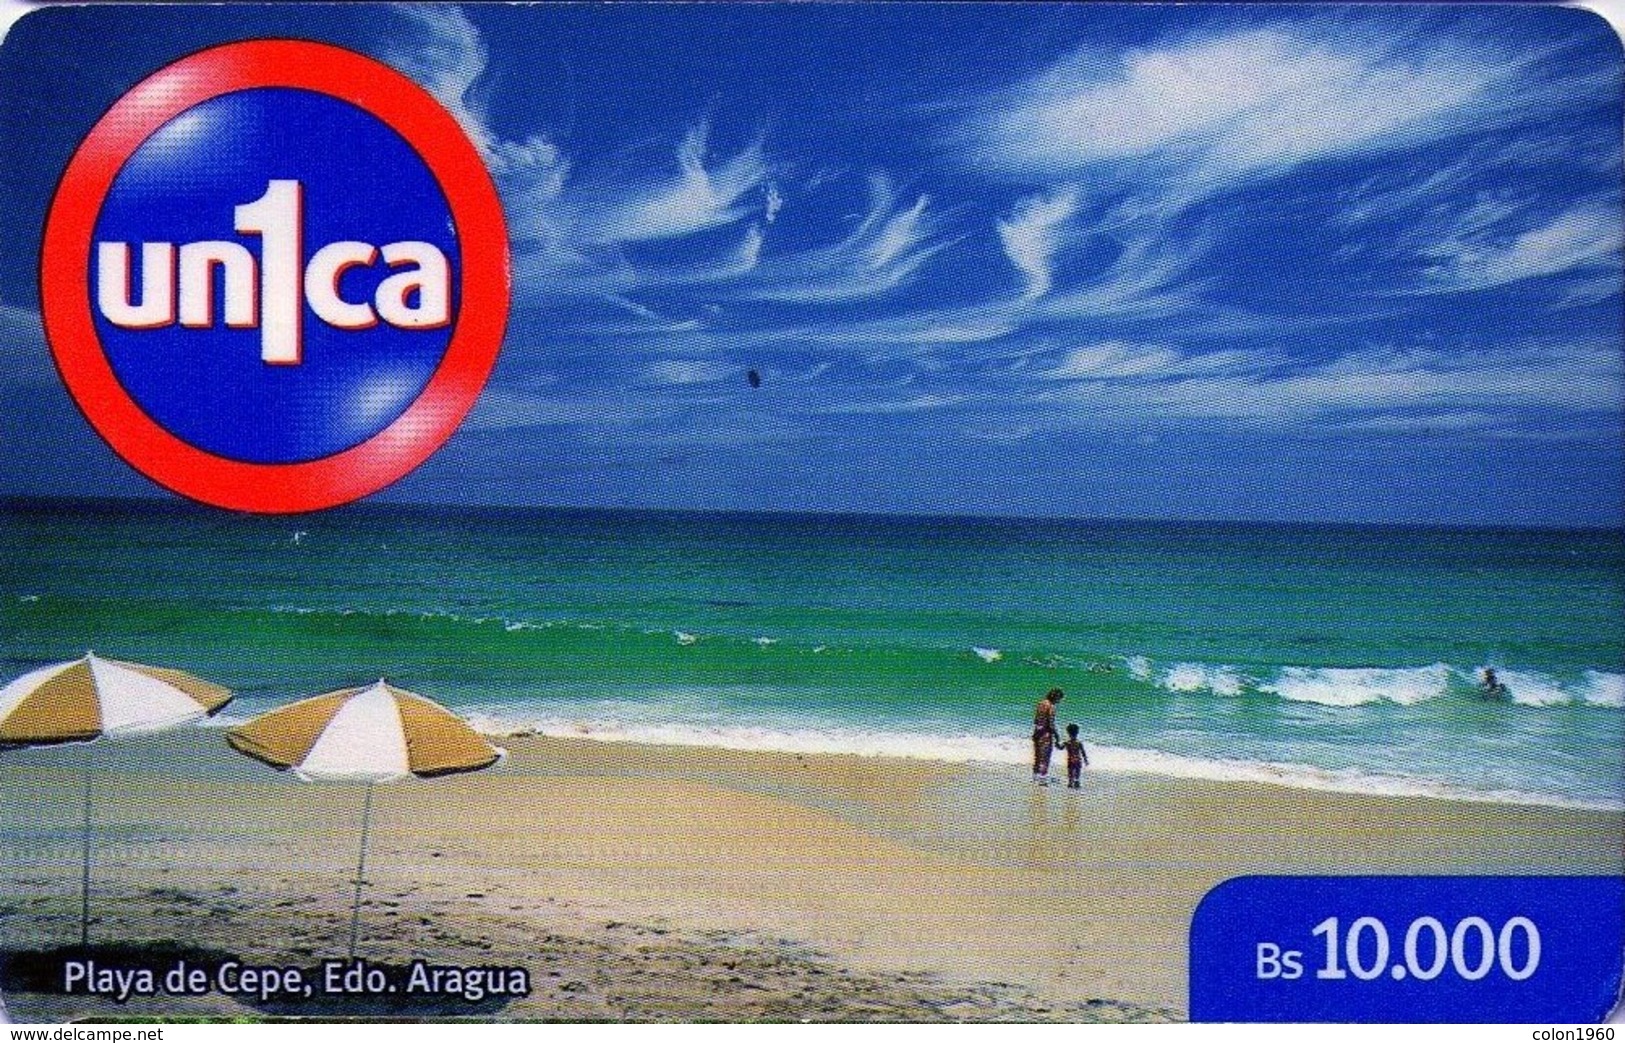 VENEZUELA, GSM-RECARGA. Playa De Cepe, Edo. Aragua. ID060502. VE-UNICA-I-060502. (270). REVERSO ESCRITO. - Venezuela